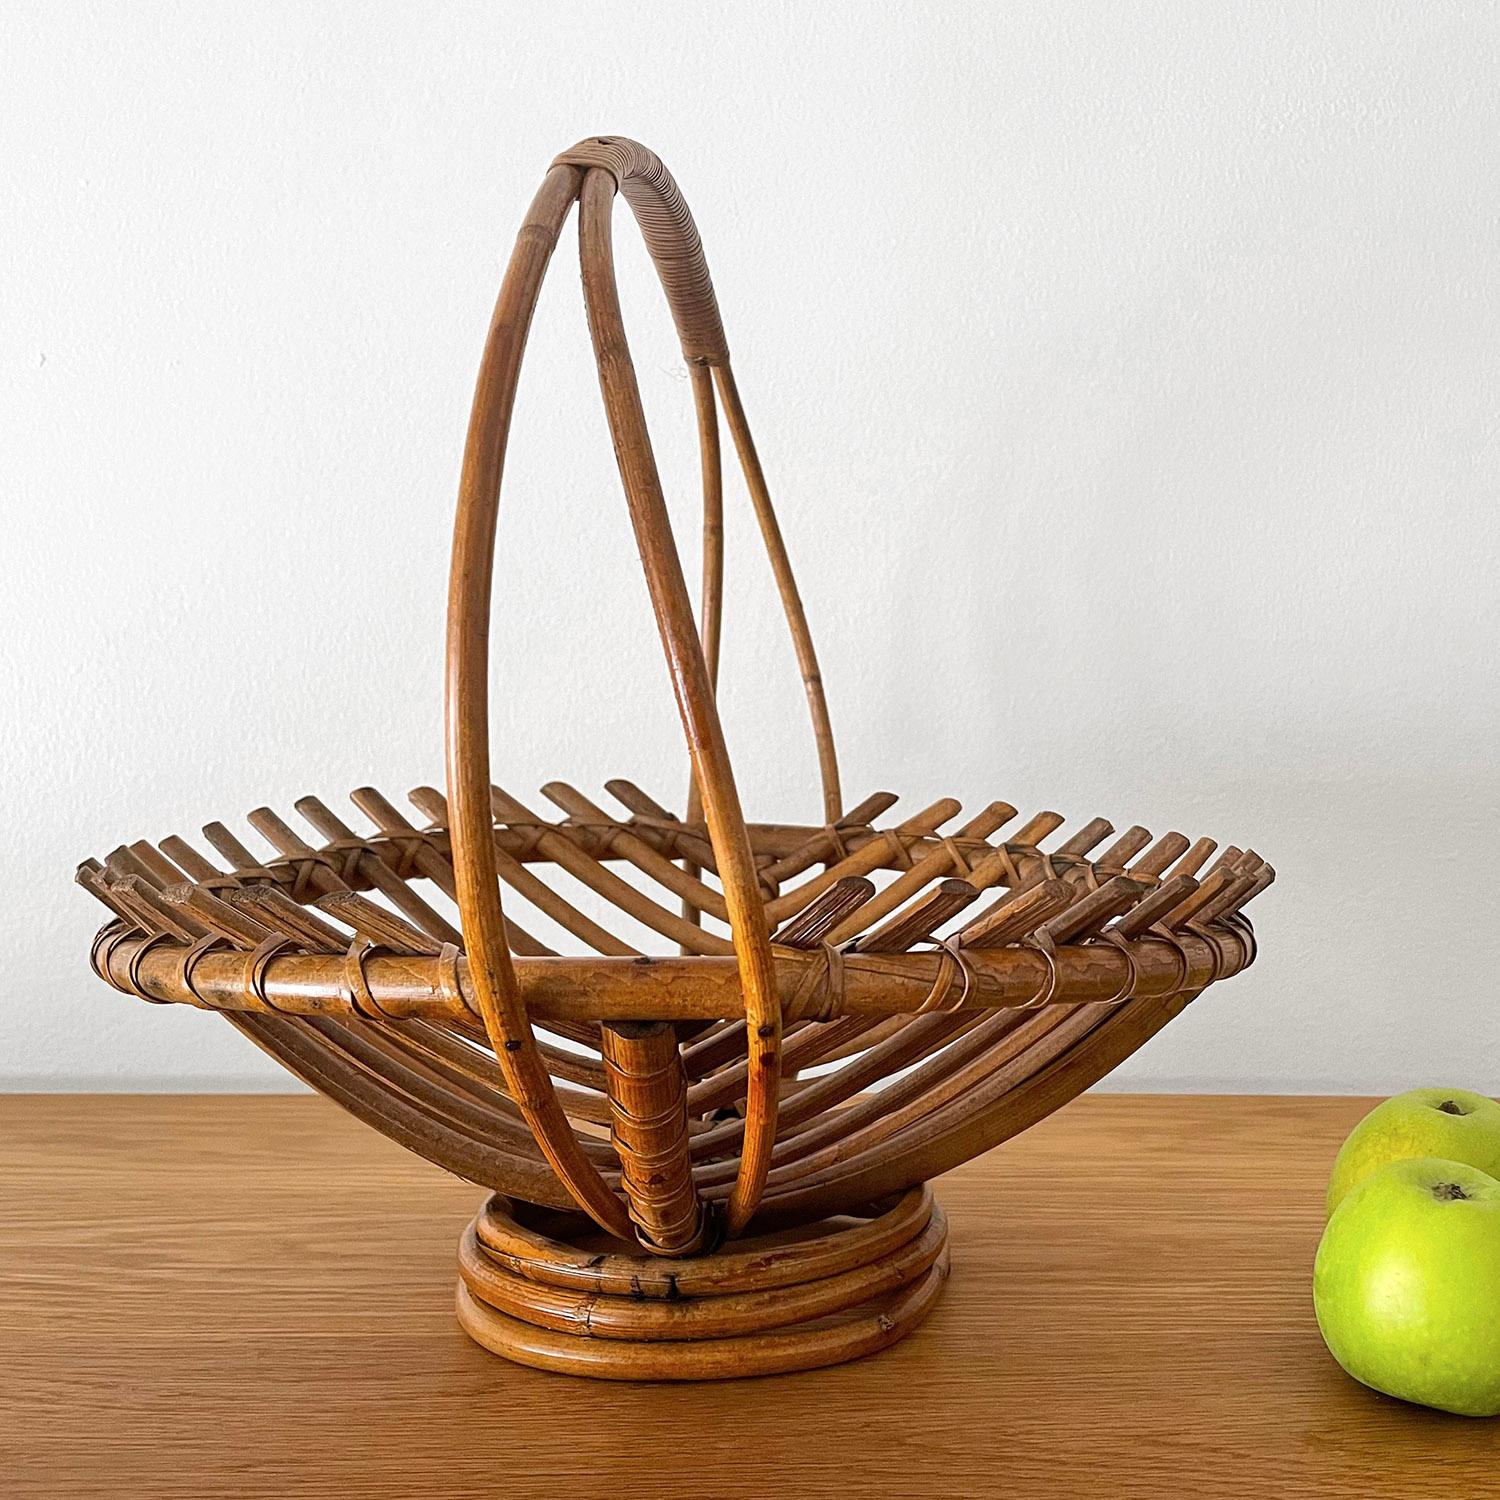 French rattan fruit basket
Sculptural bent reed with delicate curved handle 
Platform base